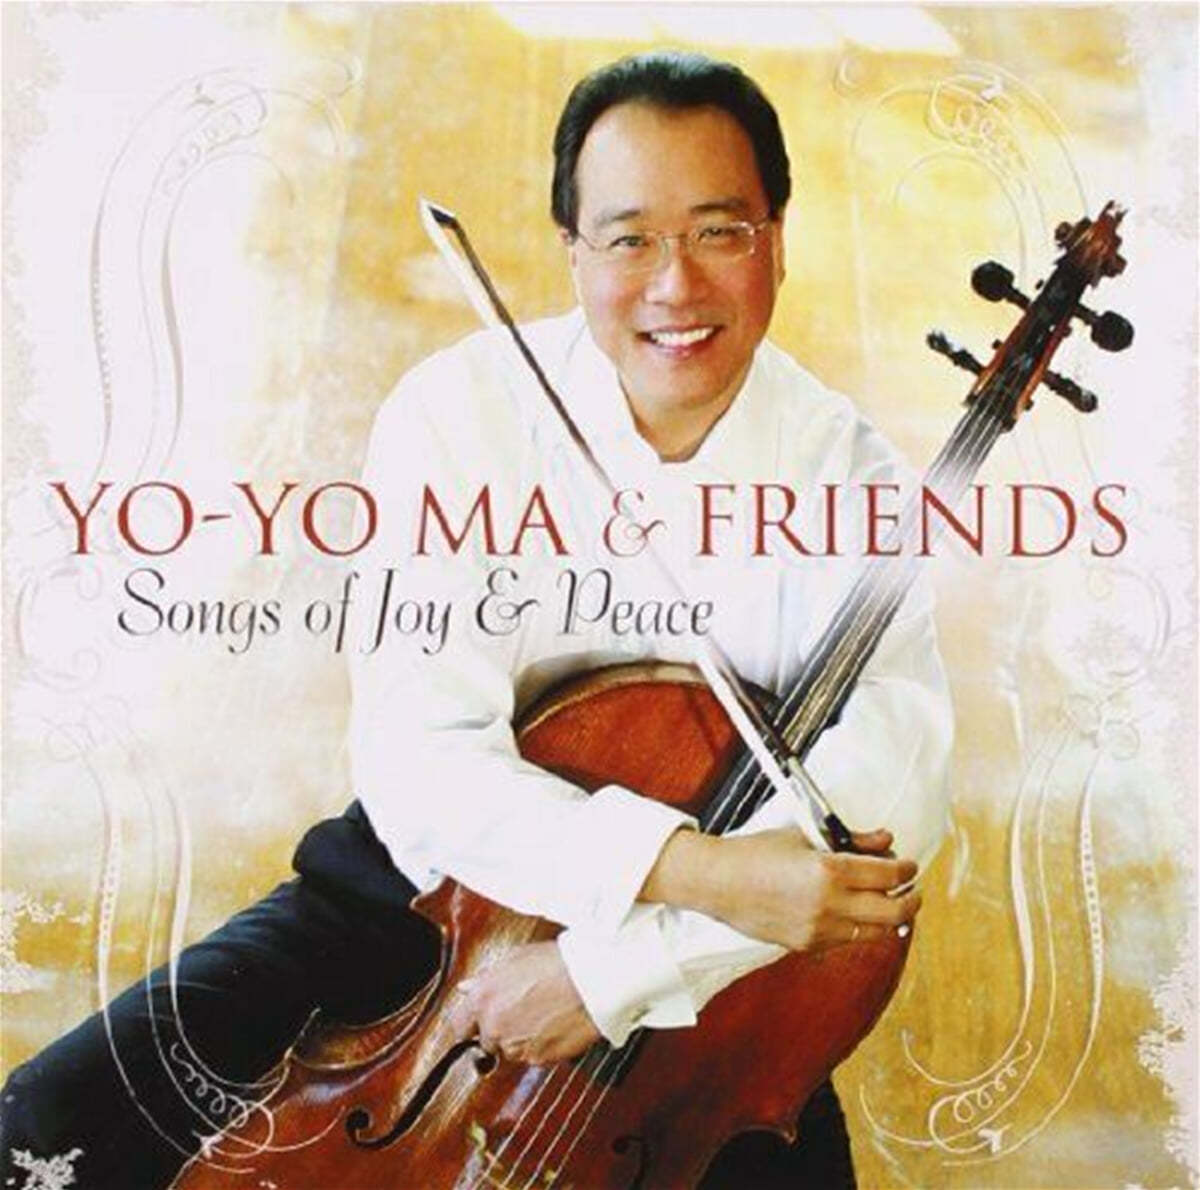 Yo-Yo Ma &amp; Friends 기쁨과 평화의 노래 (Songs of Joy &amp; Peace) 